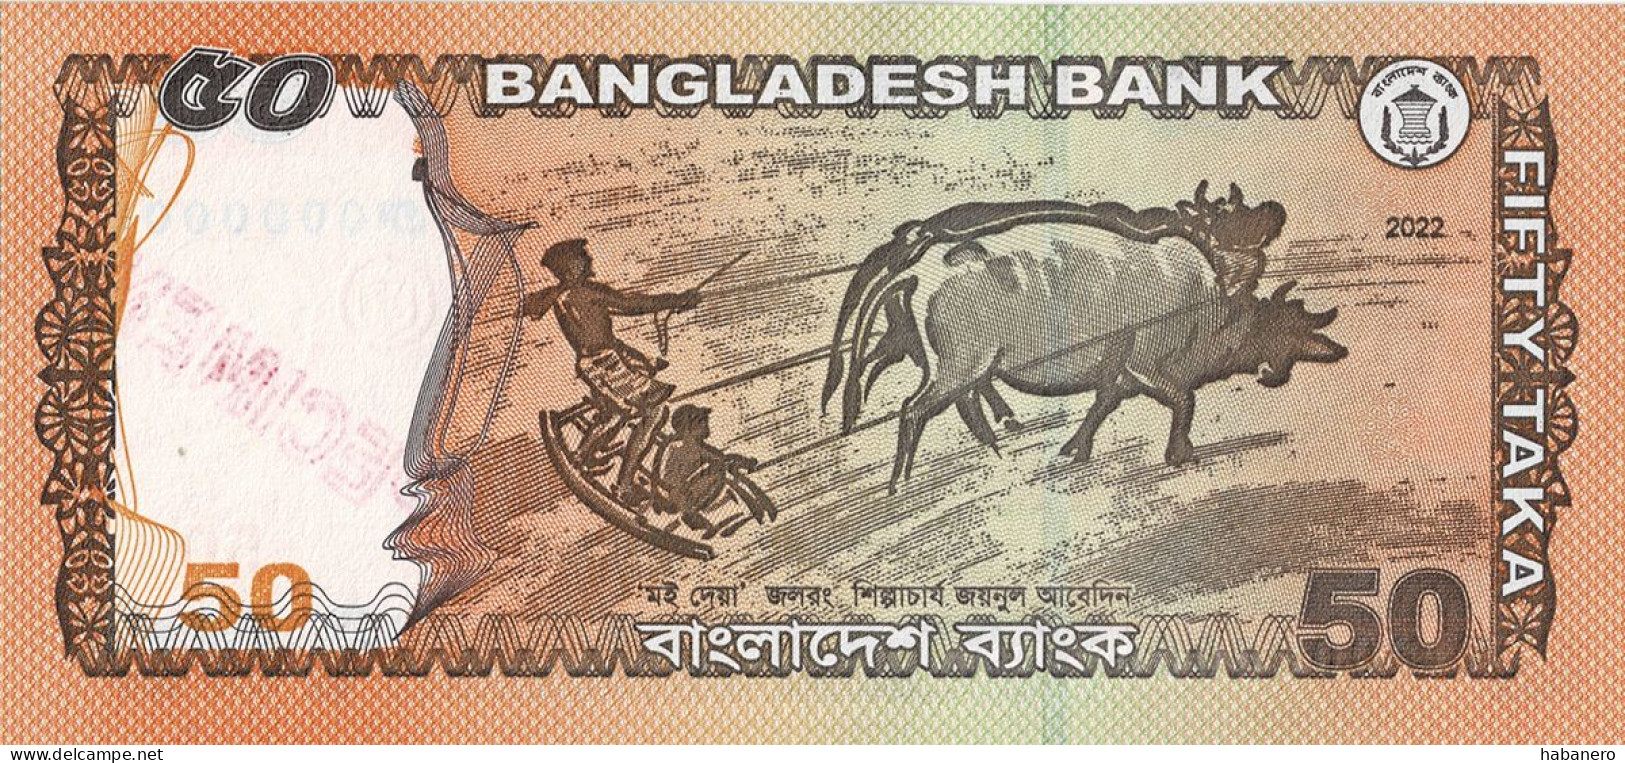 BANGLADESH 2022 50 TAKA SPECIMEN UNC BANKNOTE - Bangladesh